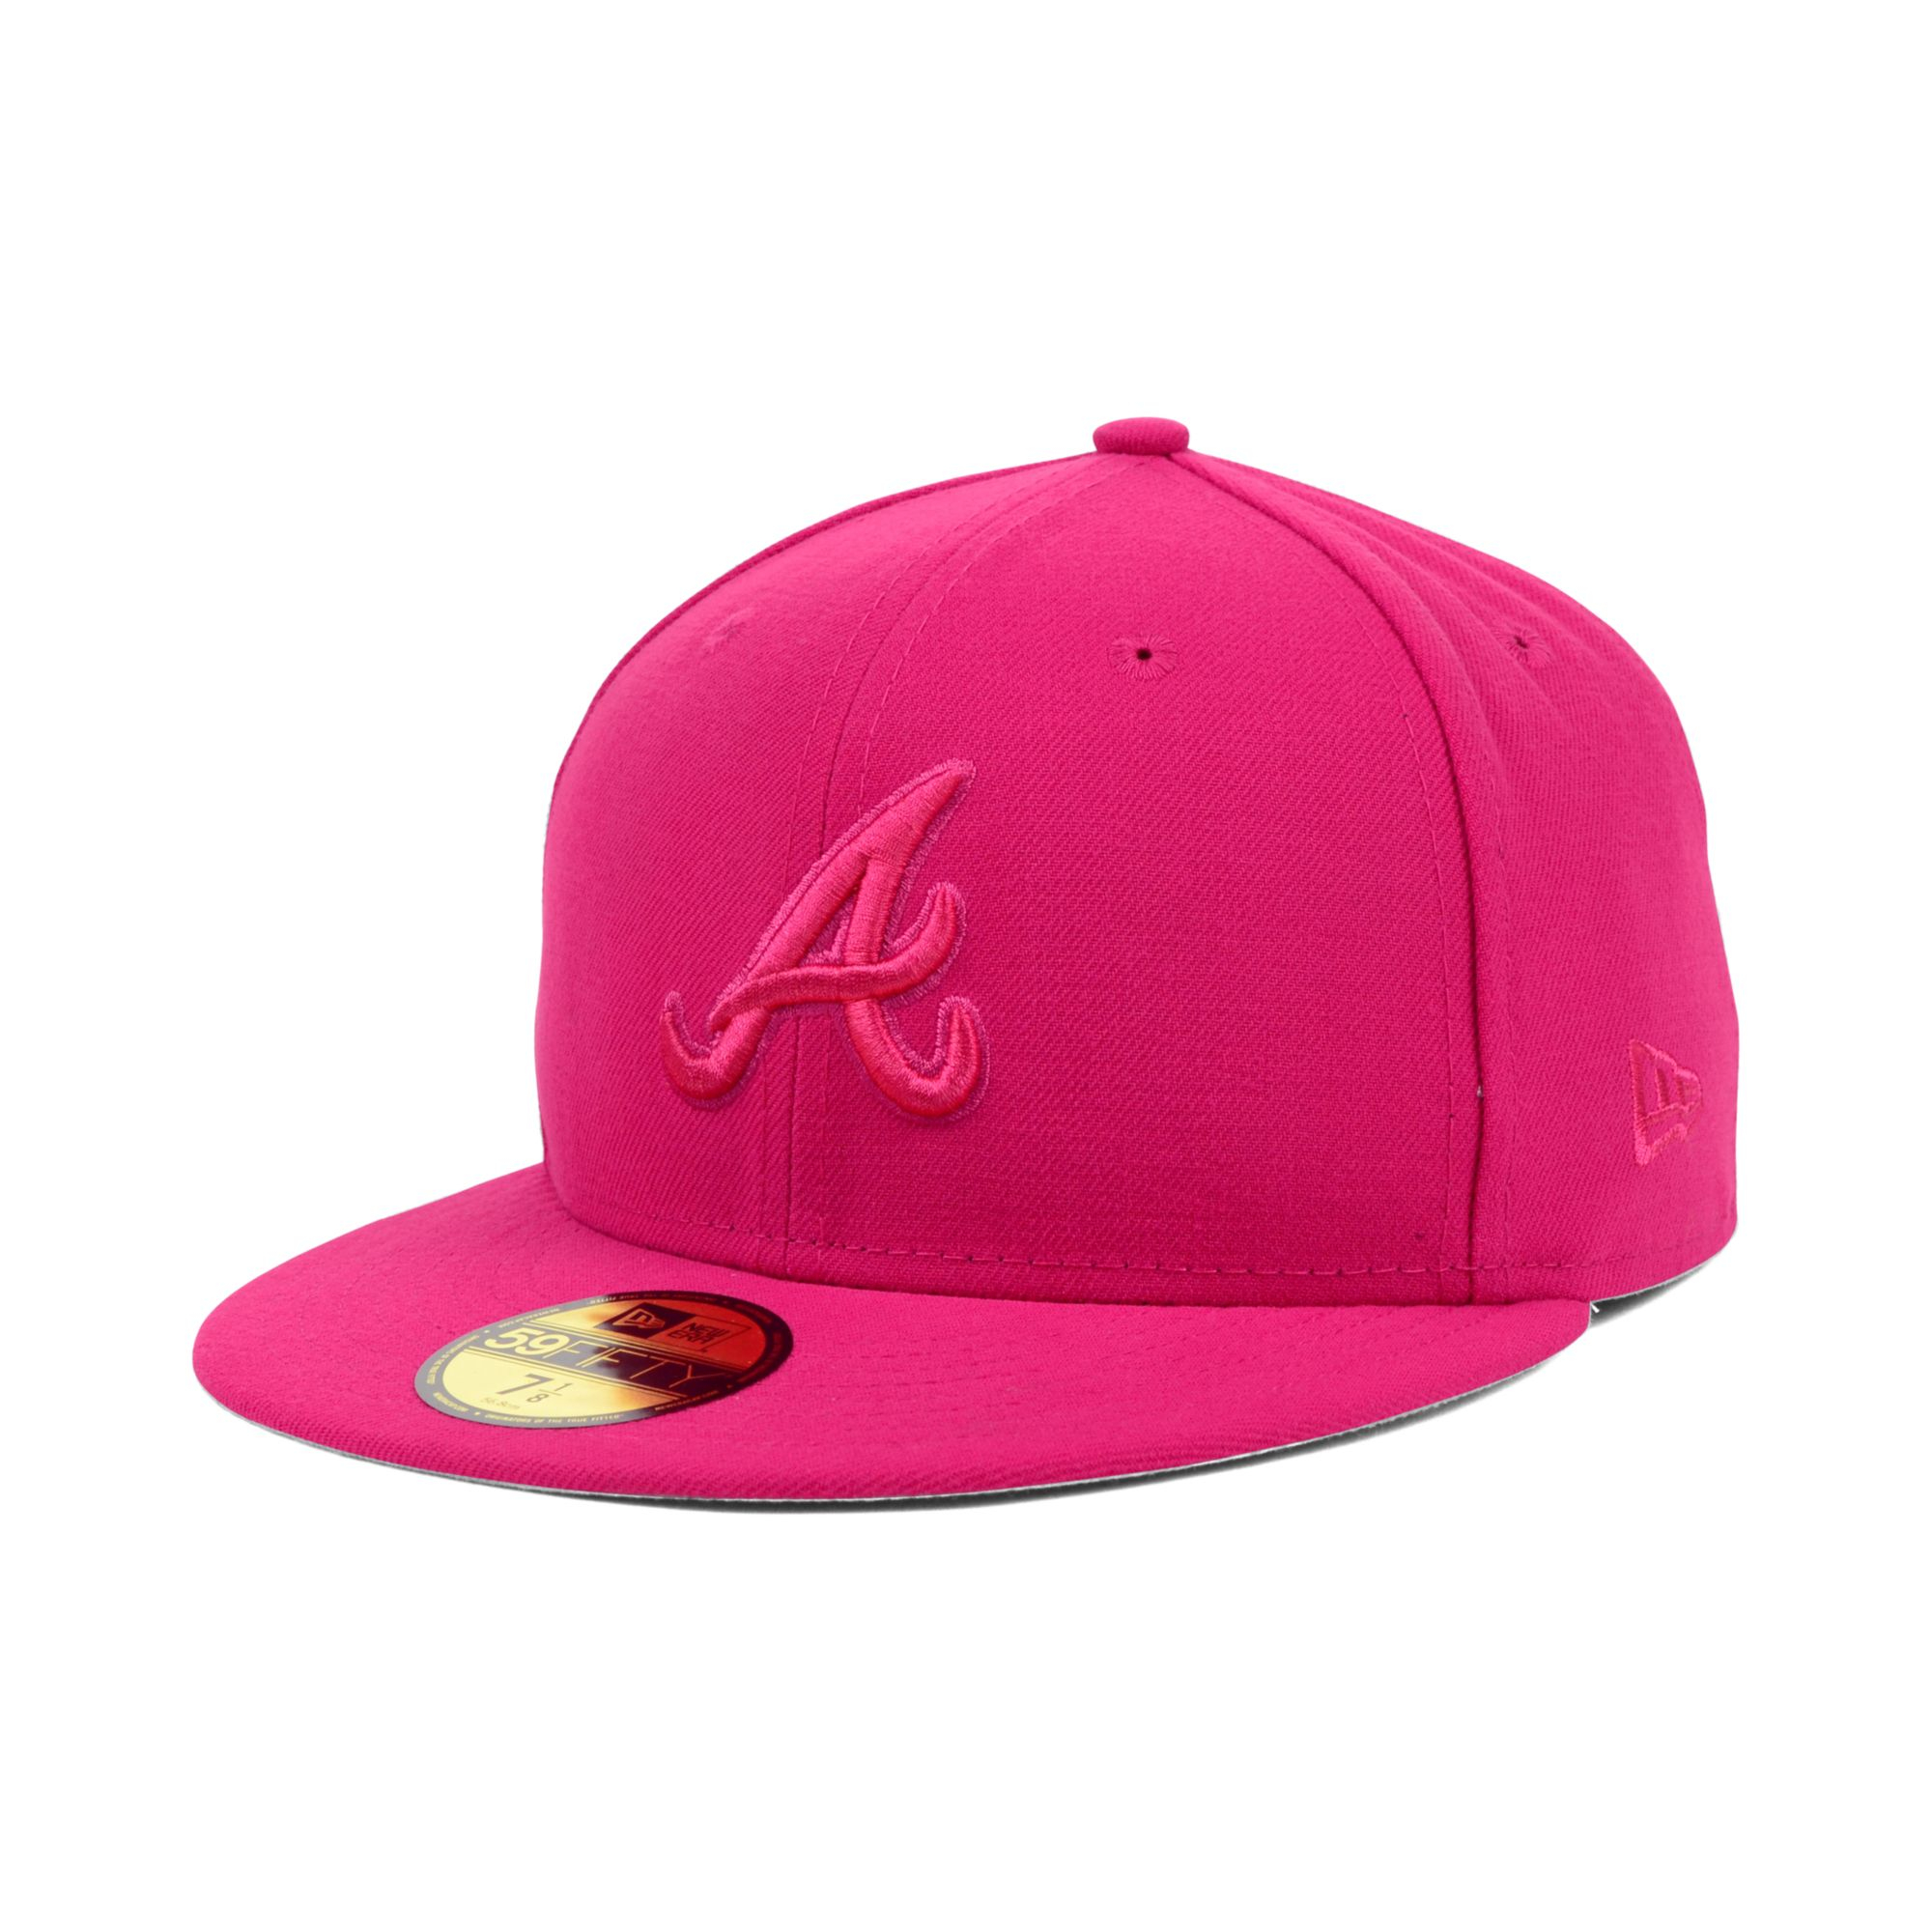 KTZ Atlanta Braves Pop Tonal 59fifty Cap in Pink - Lyst